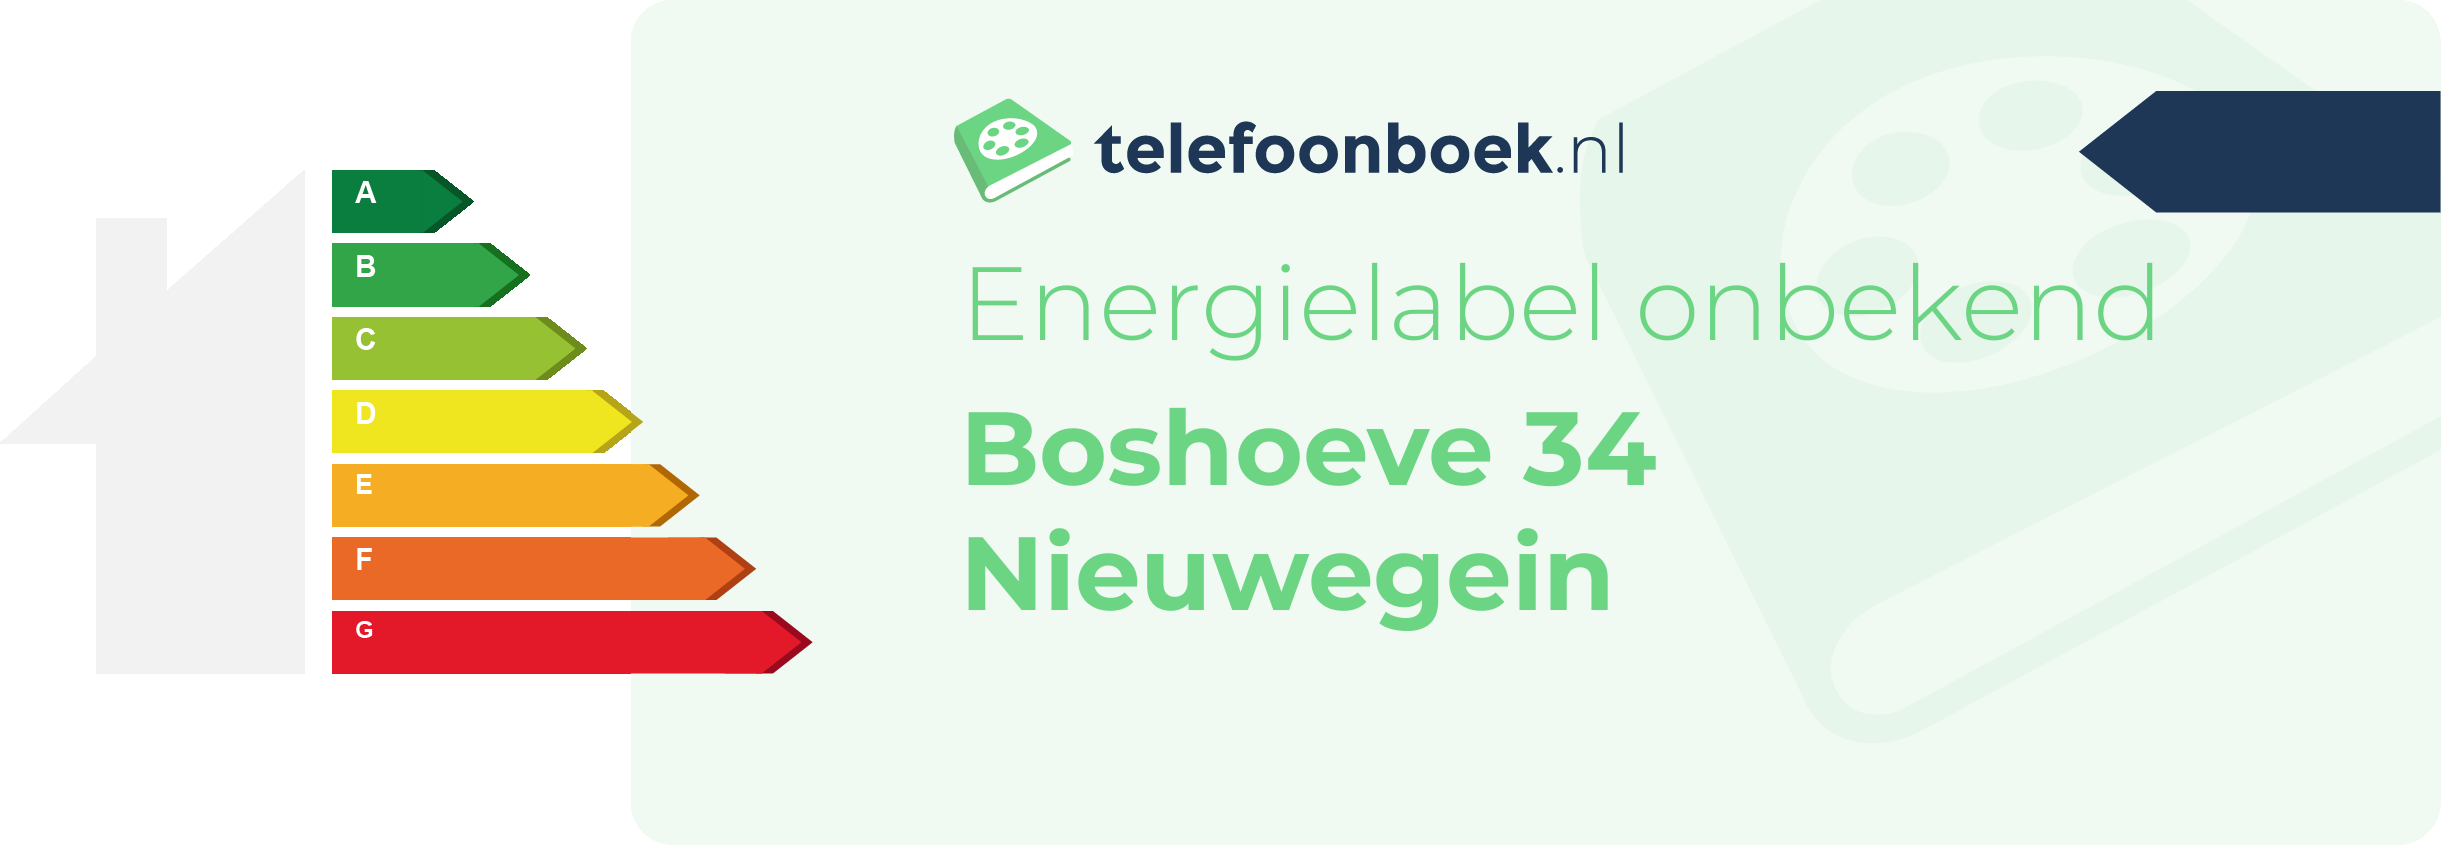 Energielabel Boshoeve 34 Nieuwegein